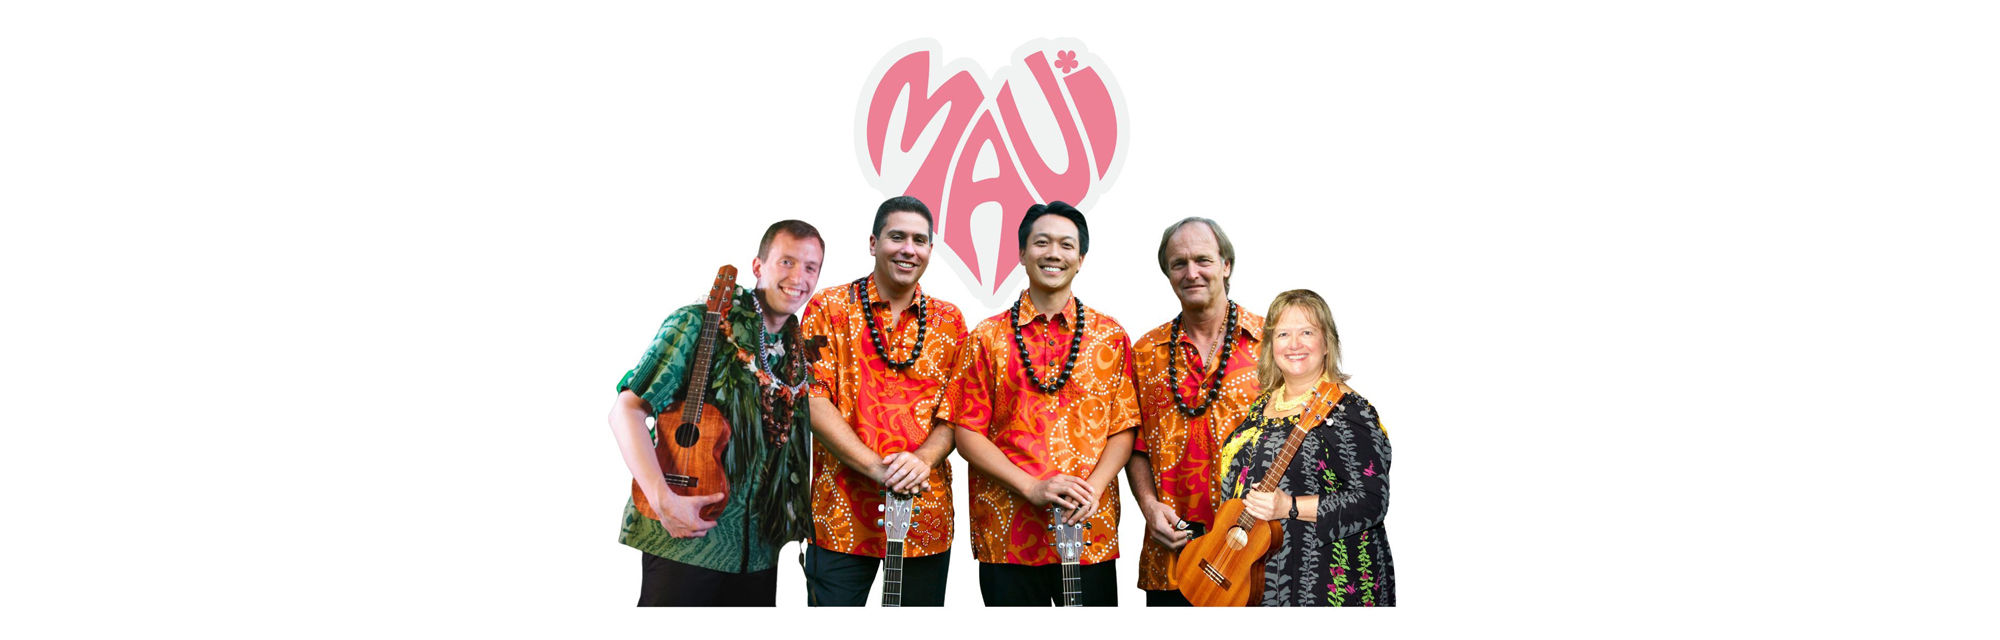 Benefit Concert for Maui